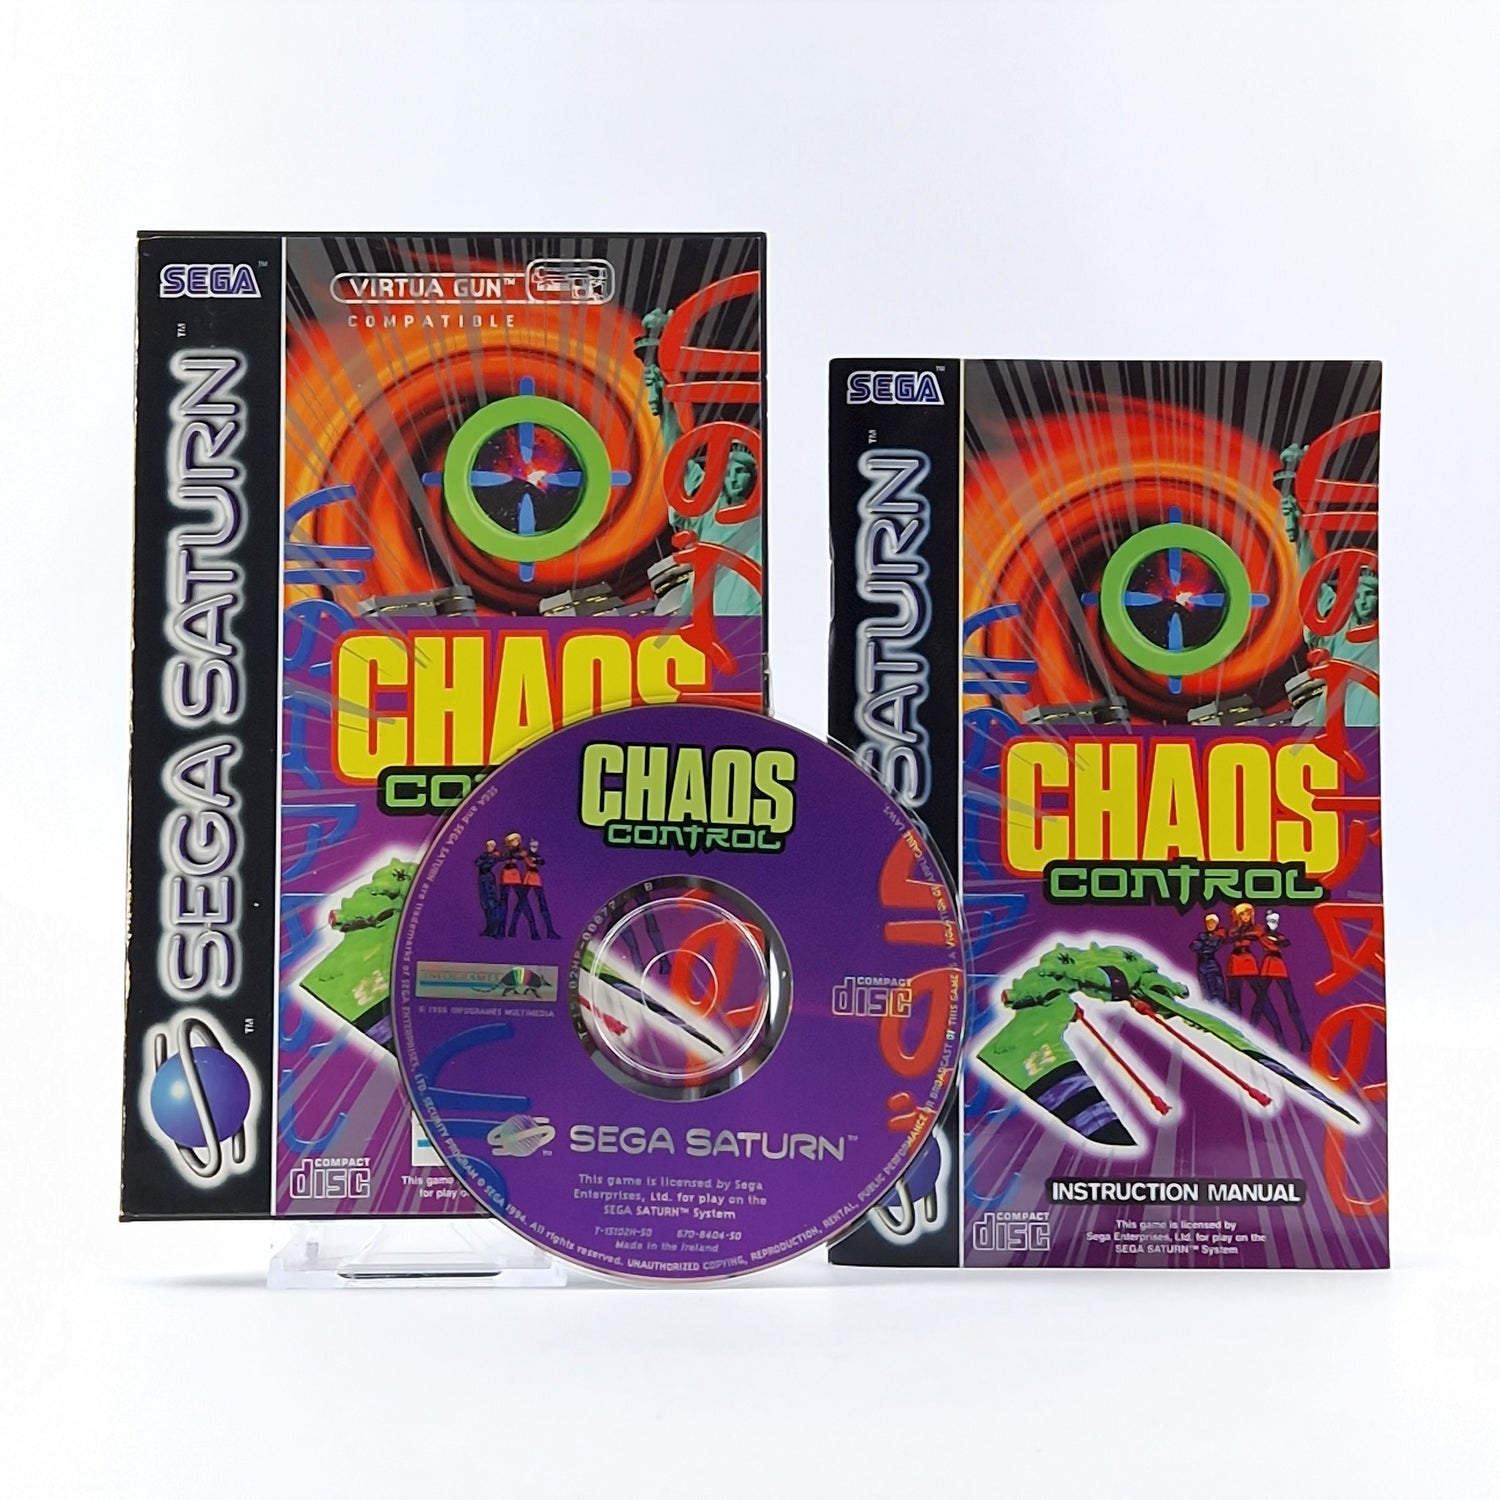 Sega Saturn Game: Chaos Control - OVP Instructions CD PAL Disc Game